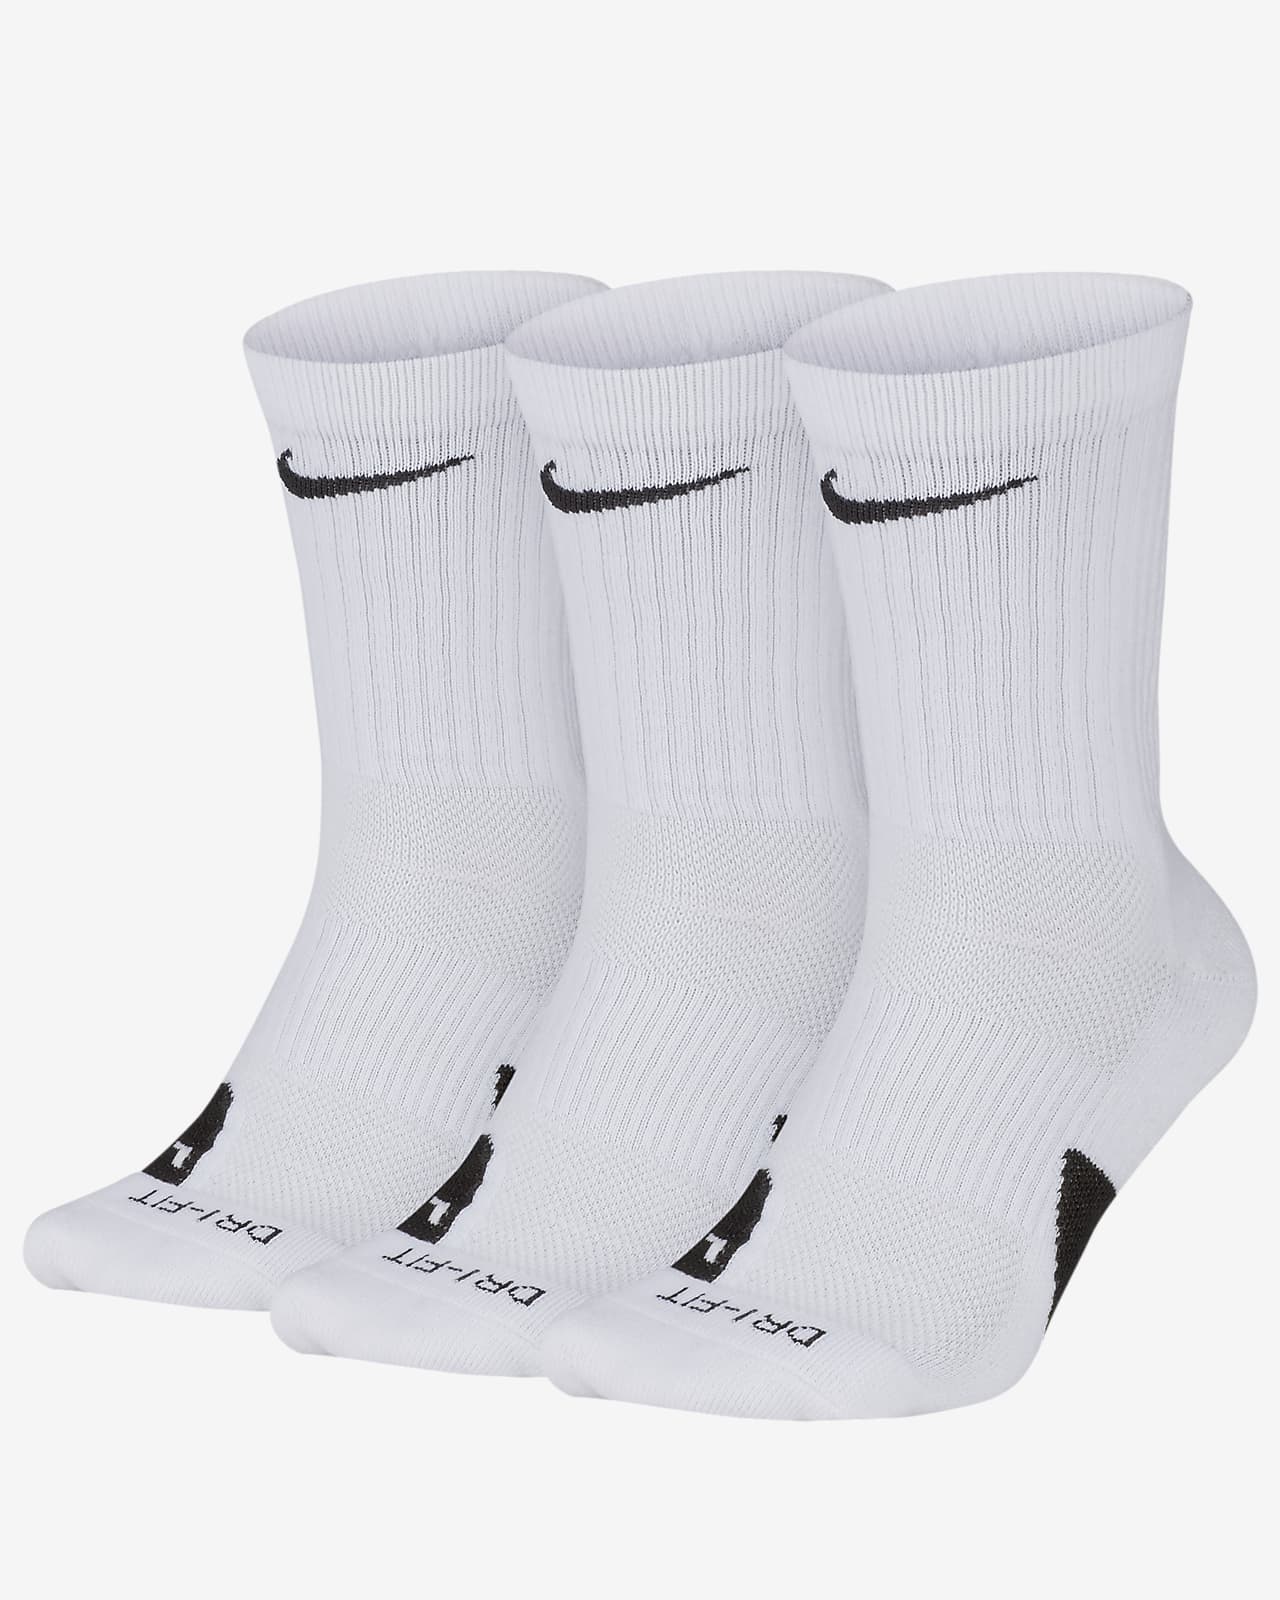 Nike Elite Basketball Crew Socks (3 Pairs)